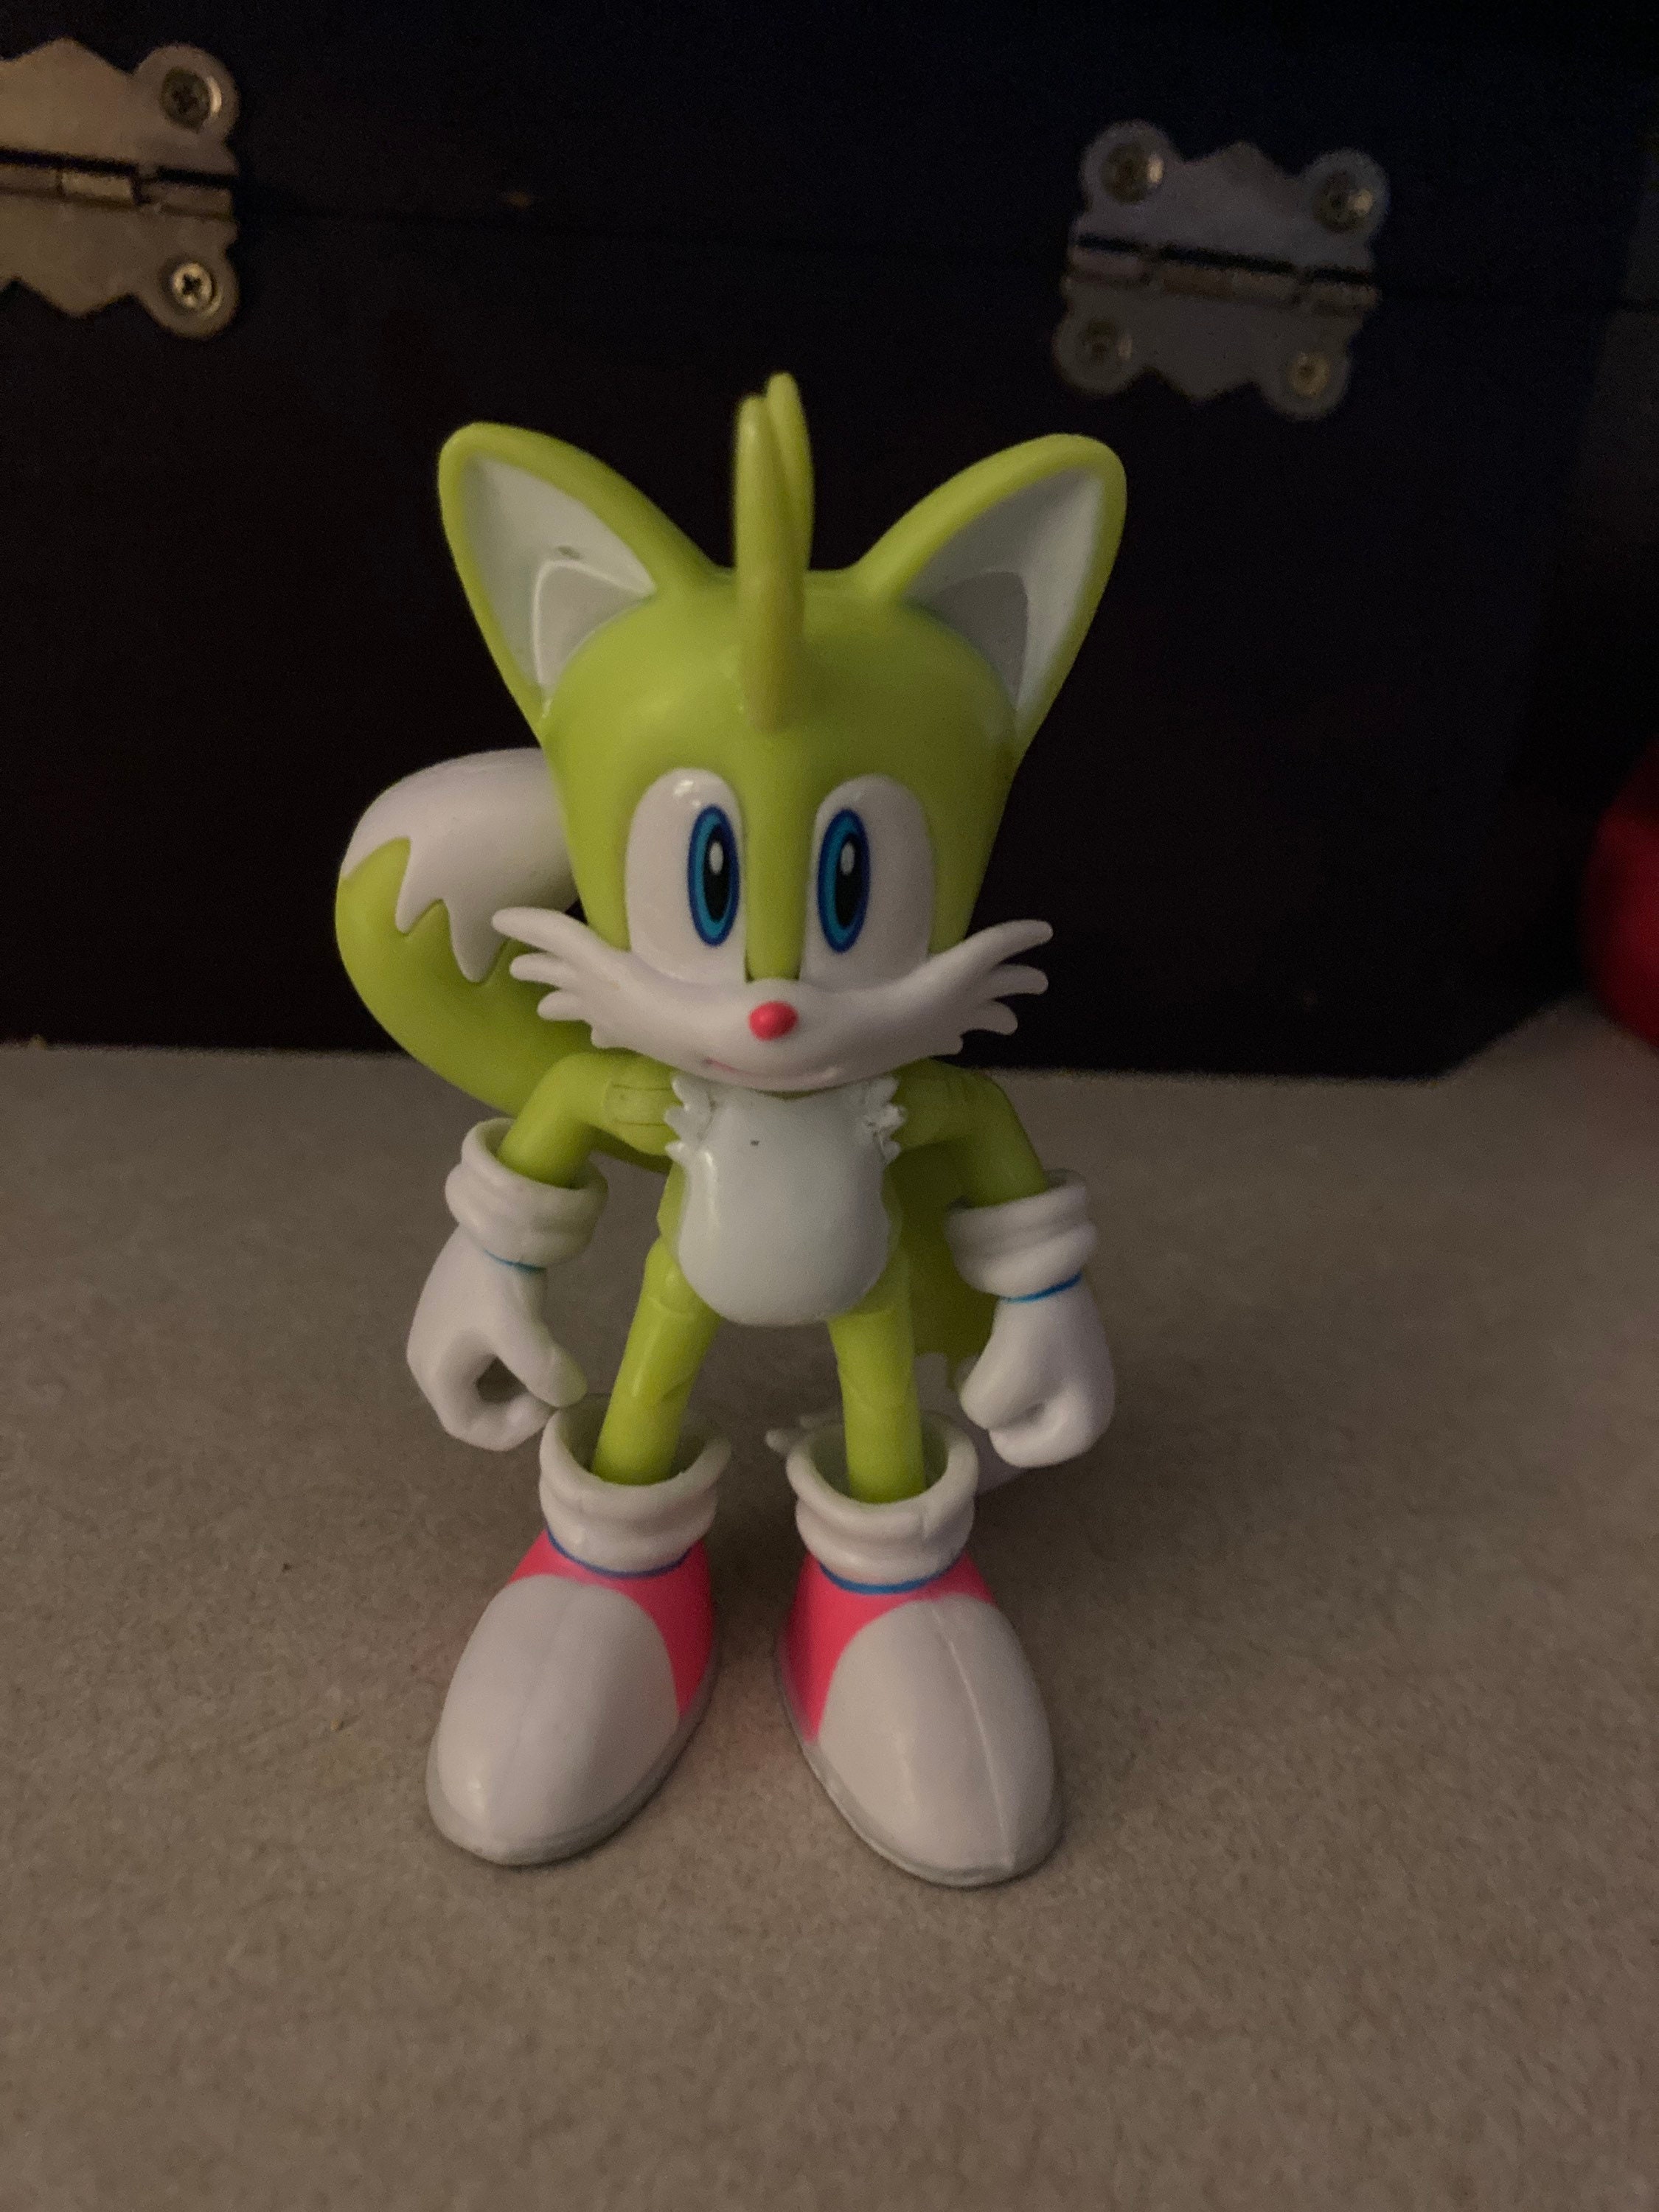 Custom / Edited - Sonic the Hedgehog Customs - Super Tails - The